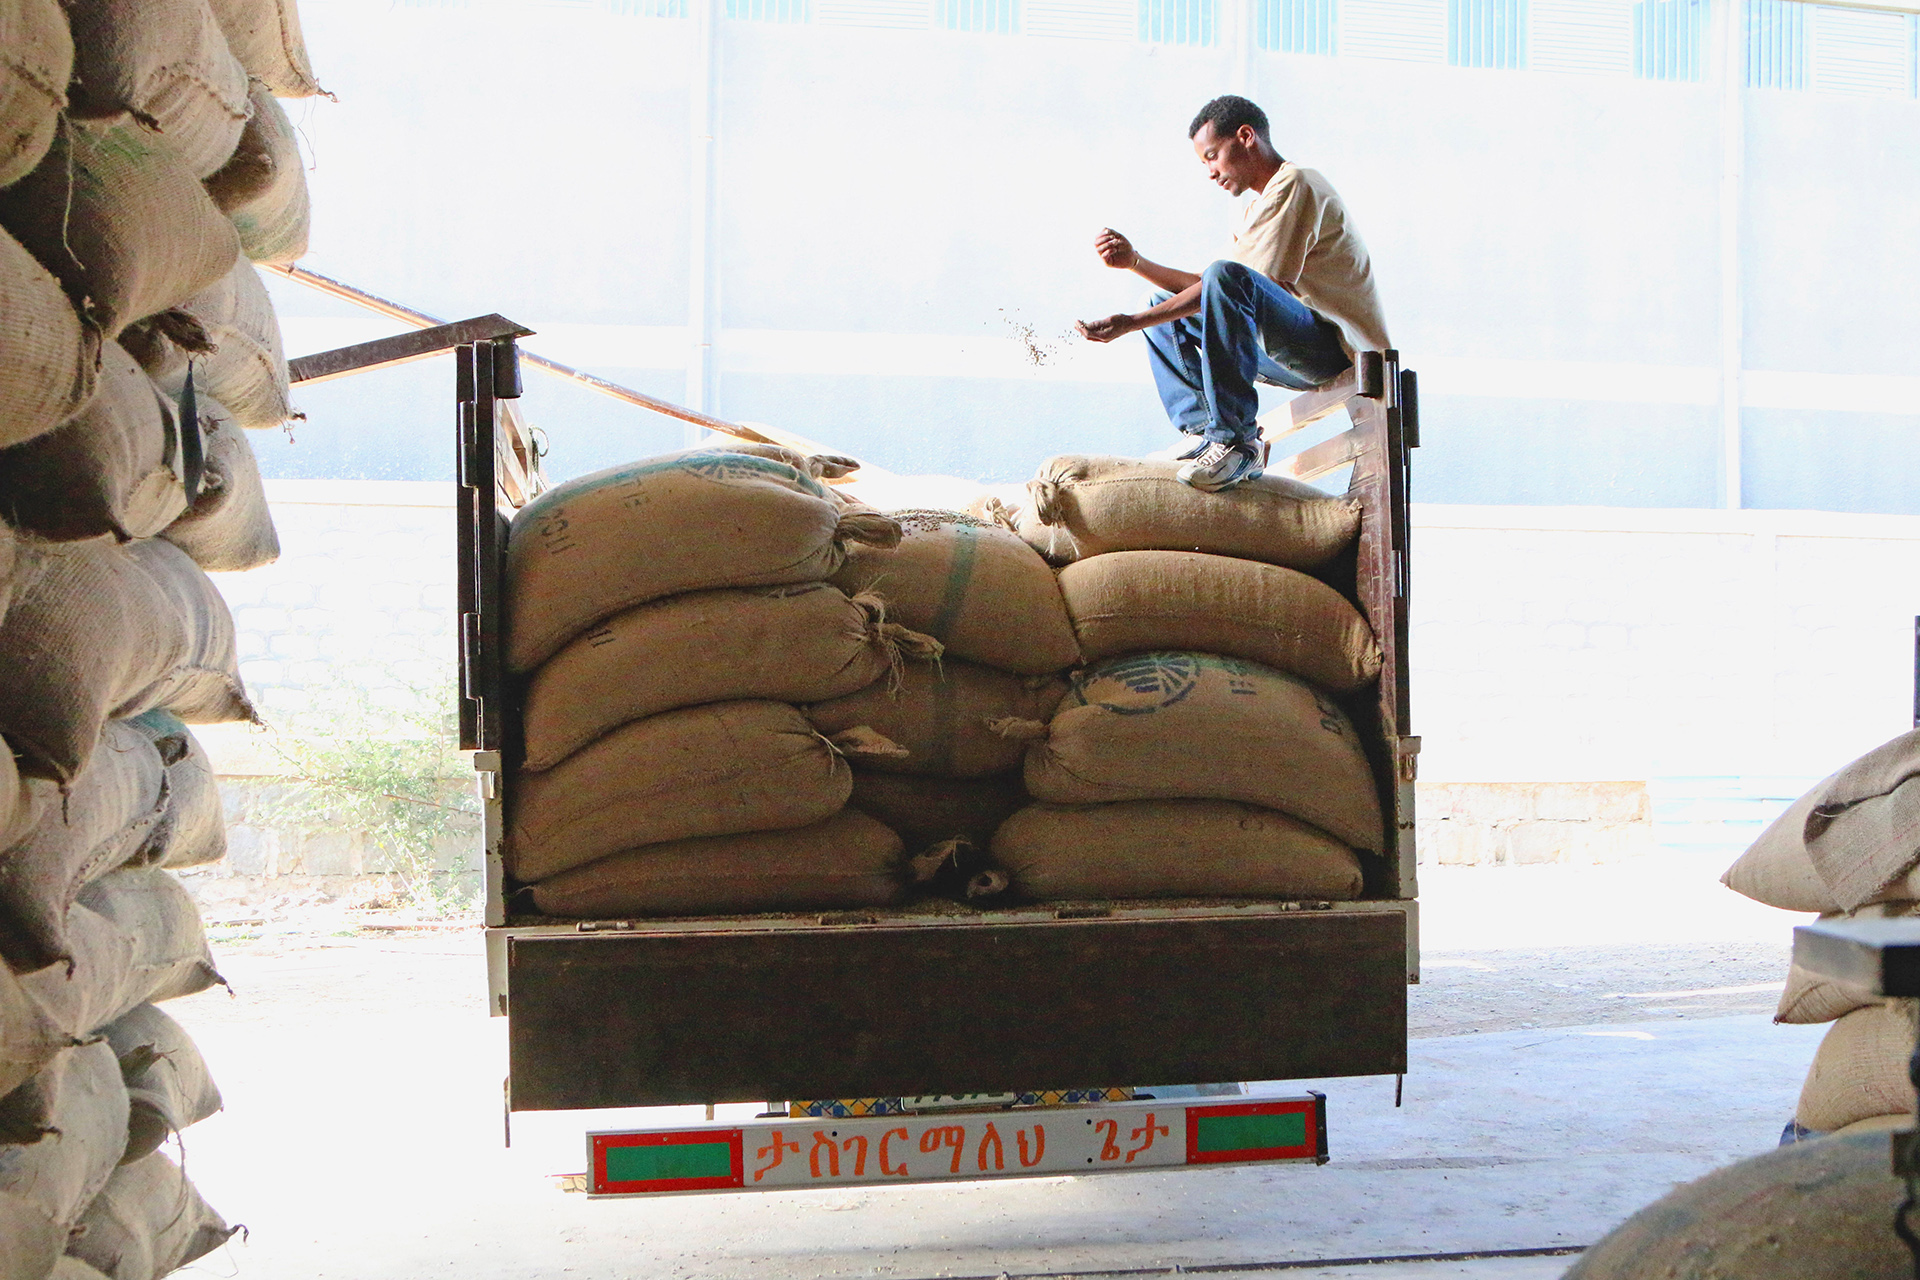 Ethiopian Coffee Beans For Trade Members